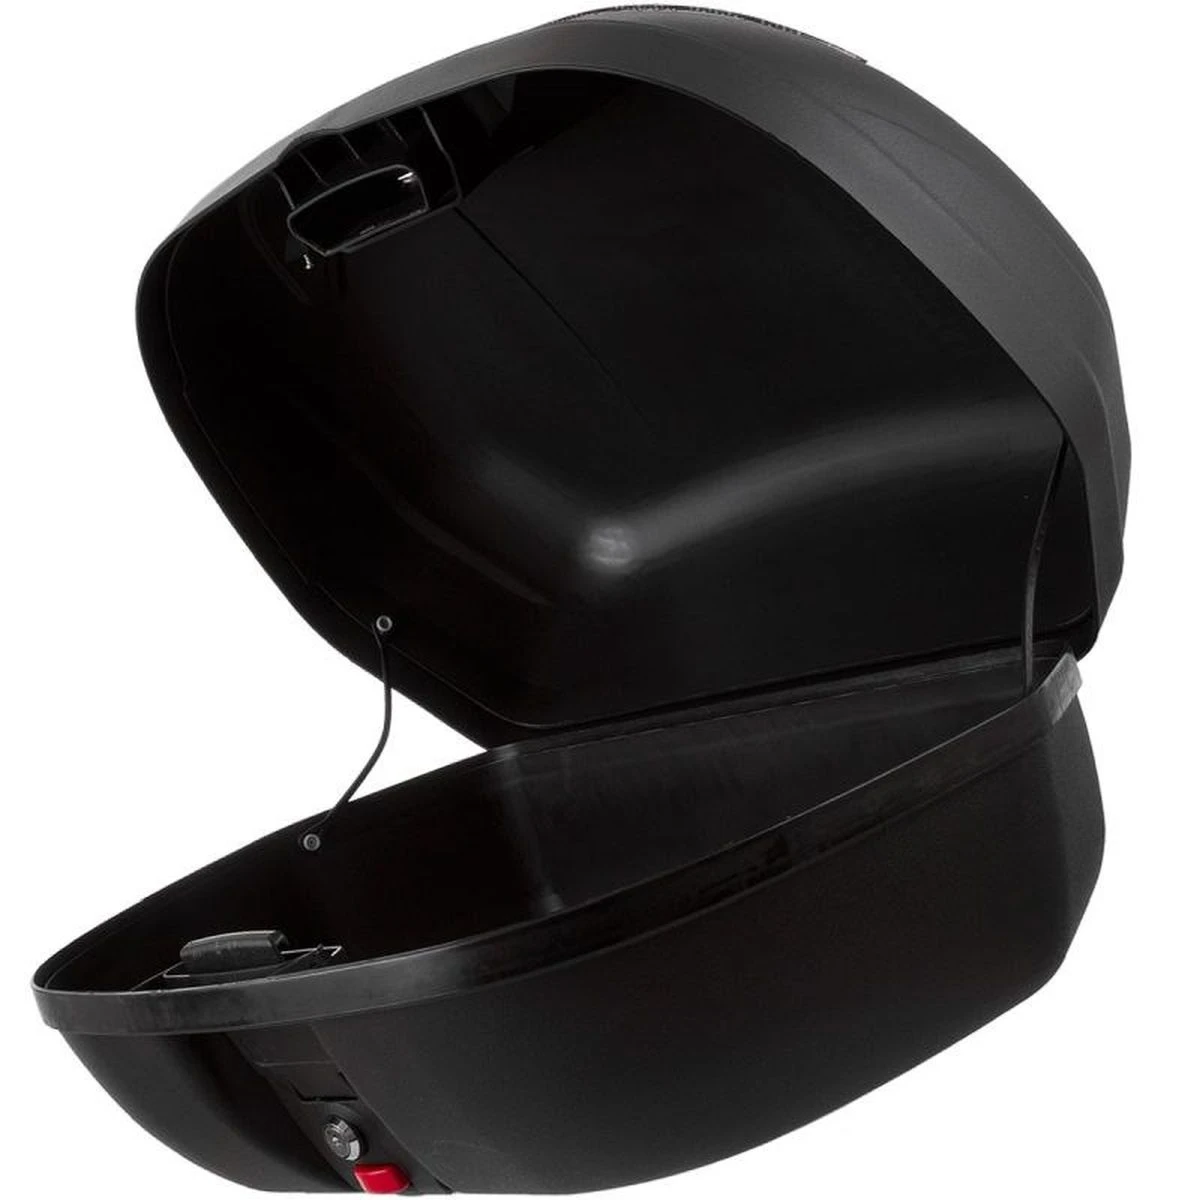 Baul Smart Box Trasero Para Moto TORK 45 Litros - $ 79.959 - STI Digital